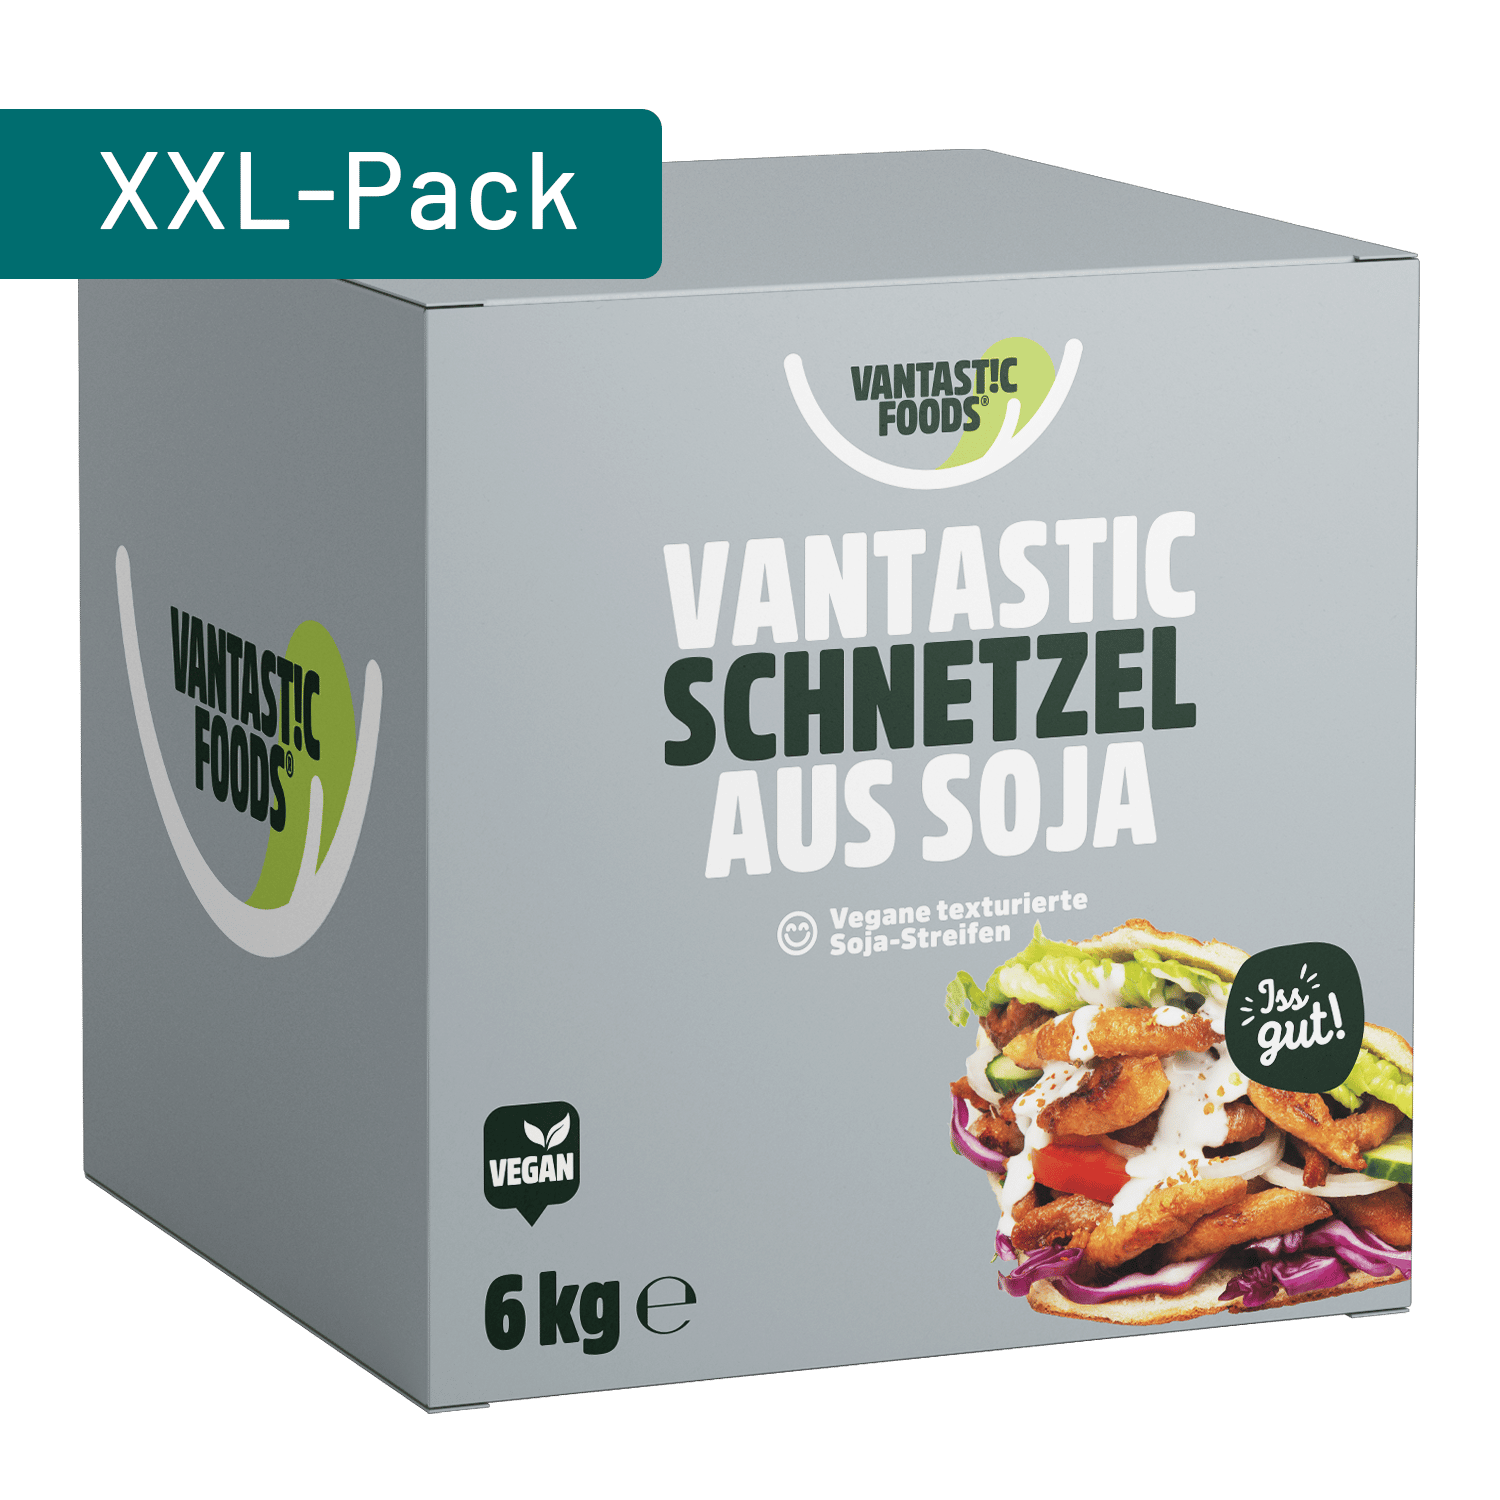 Vantastic Schnetzel From Soy, 6kg